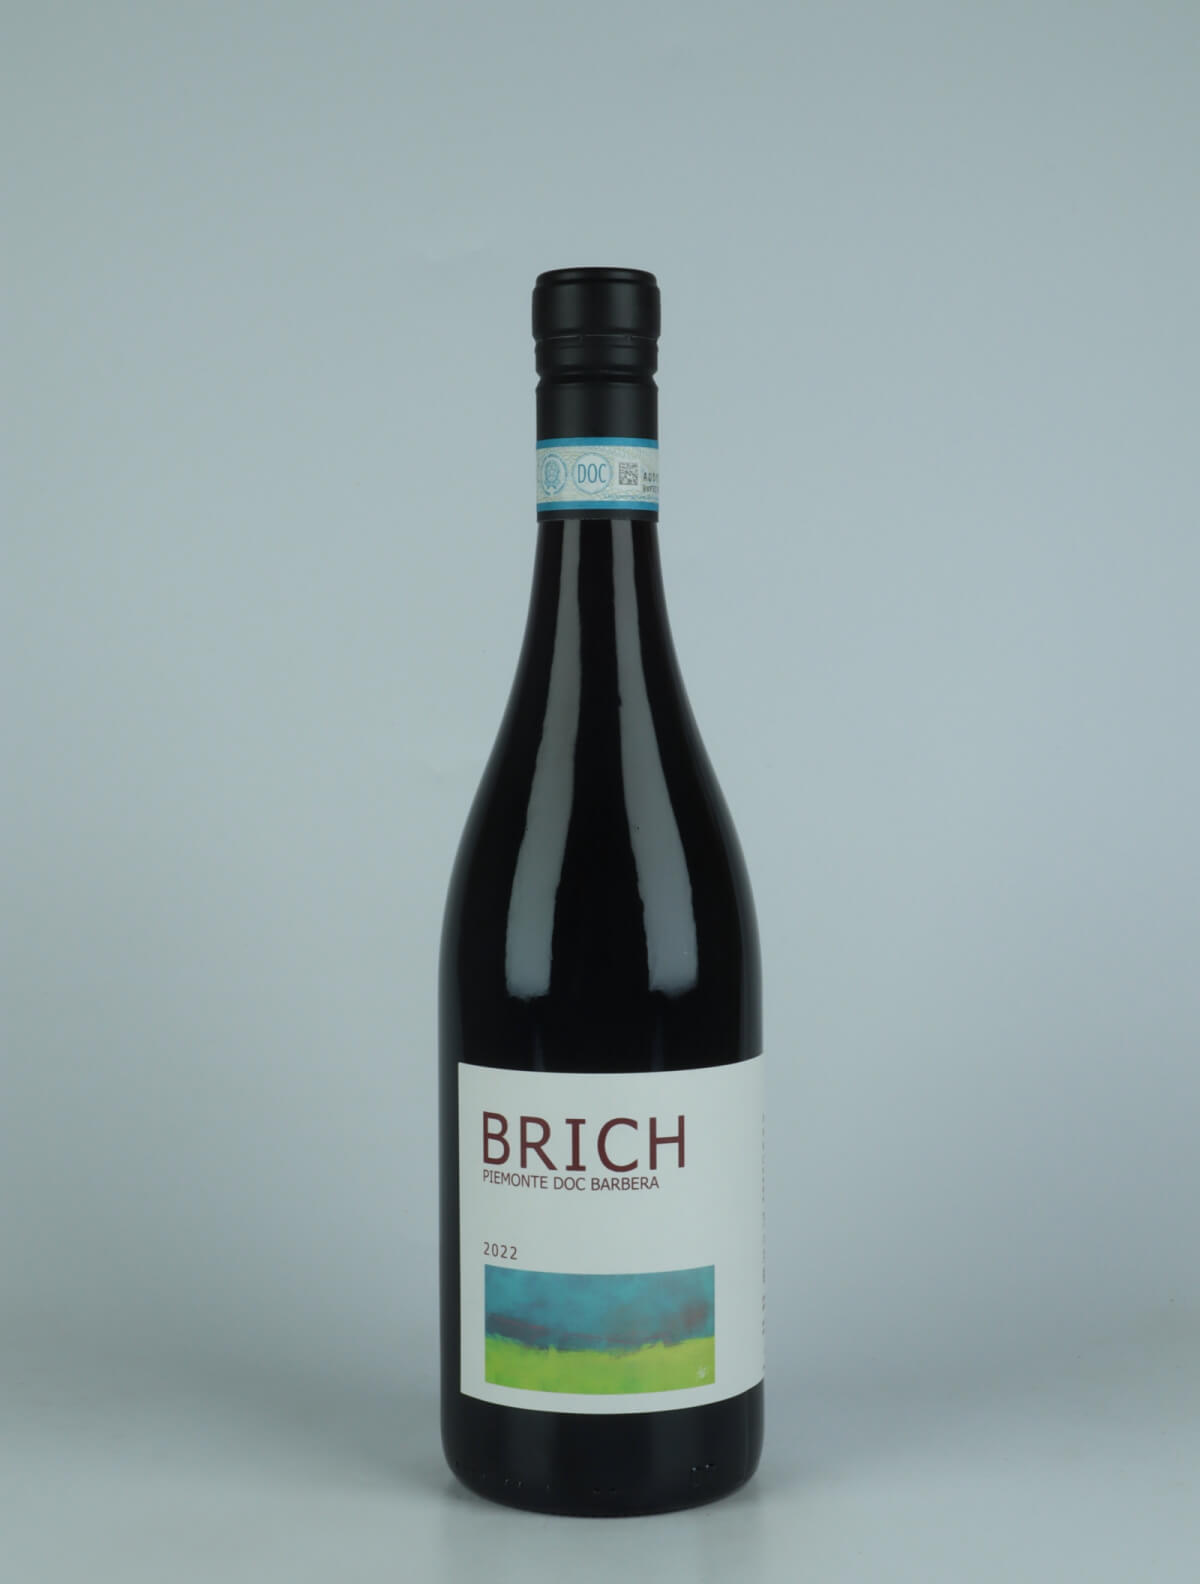 En flaske 2022 Barbera - Brich Rødvin fra Agricola Gaia, Piemonte i Italien